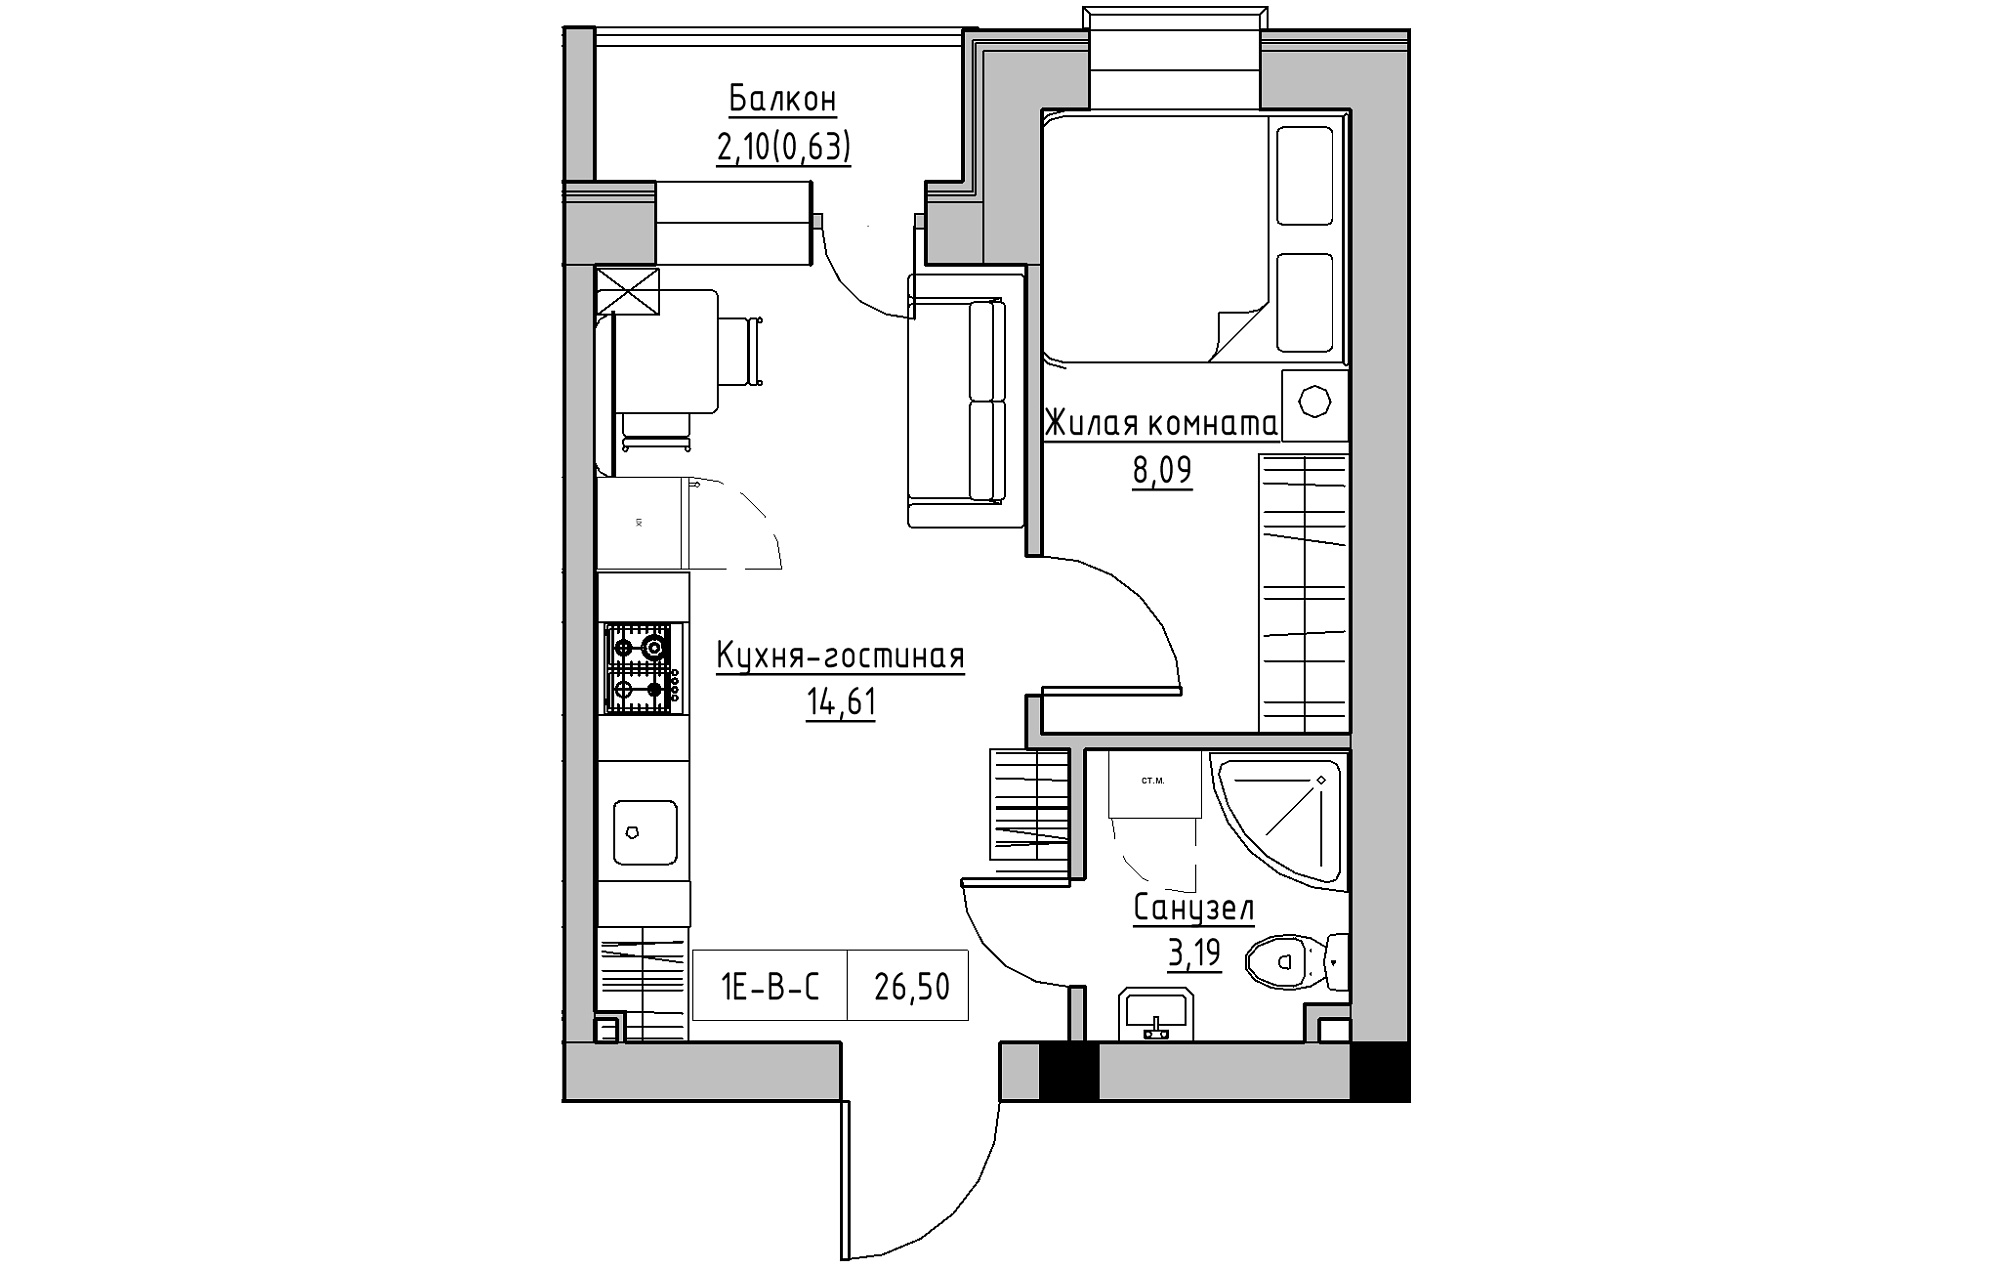 Planning 1-rm flats area 26.5m2, KS-018-05/0008.